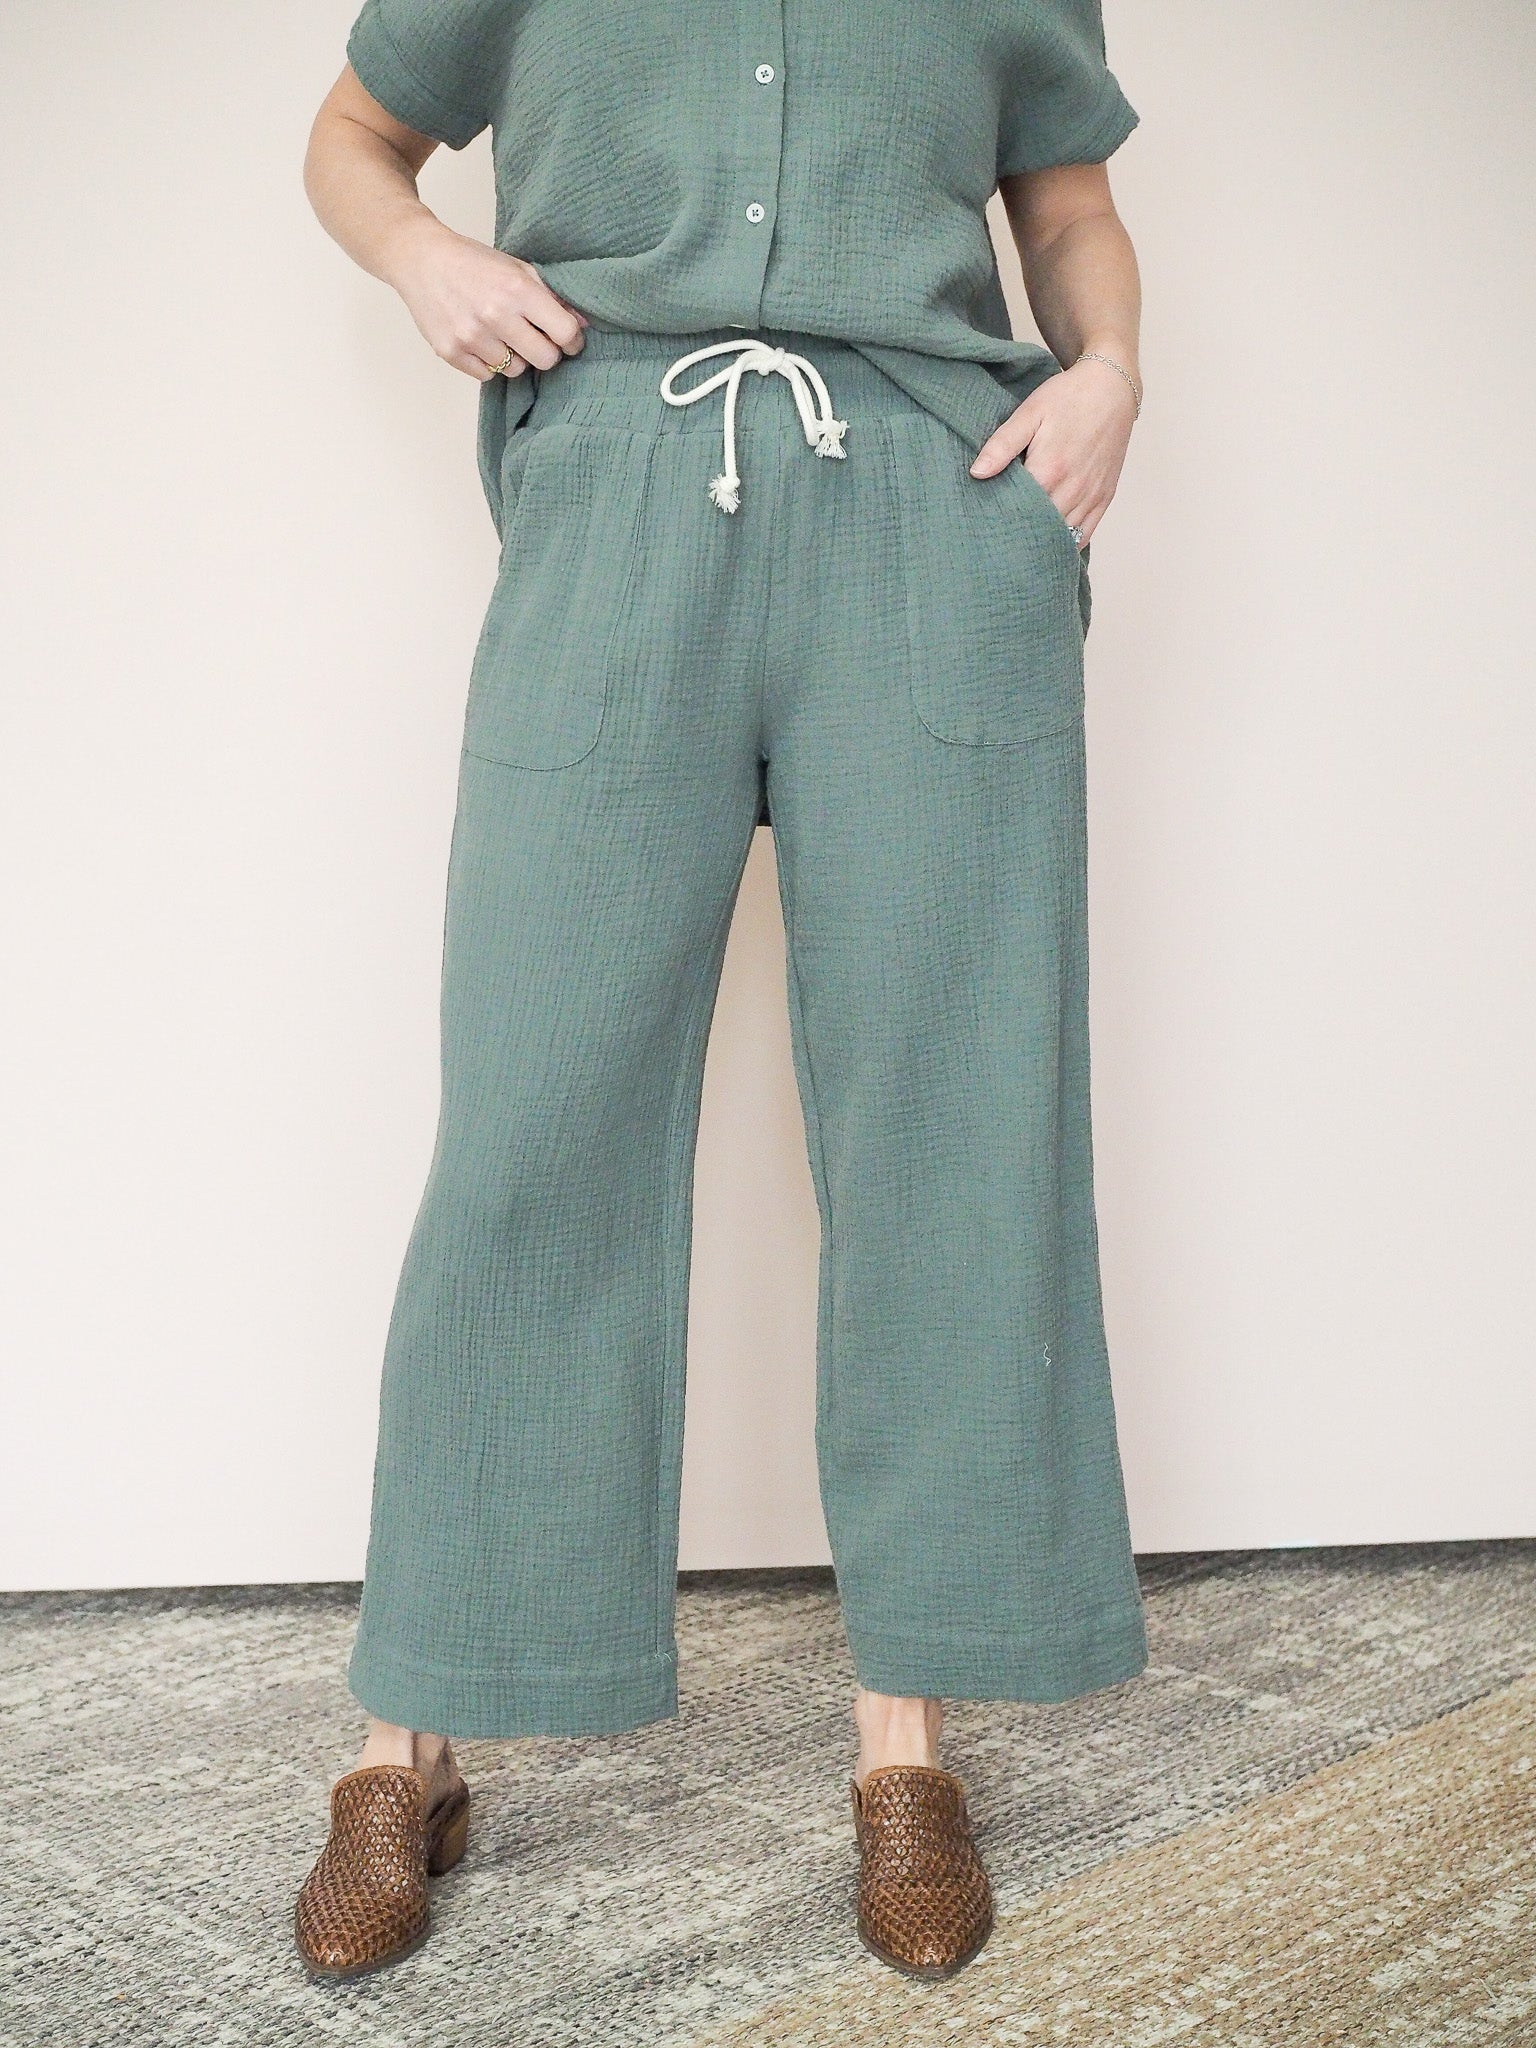 Tribal Brand Stretch Denim pants Sz 16 Khaki (olive green) 4001O-353 $59 |  eBay